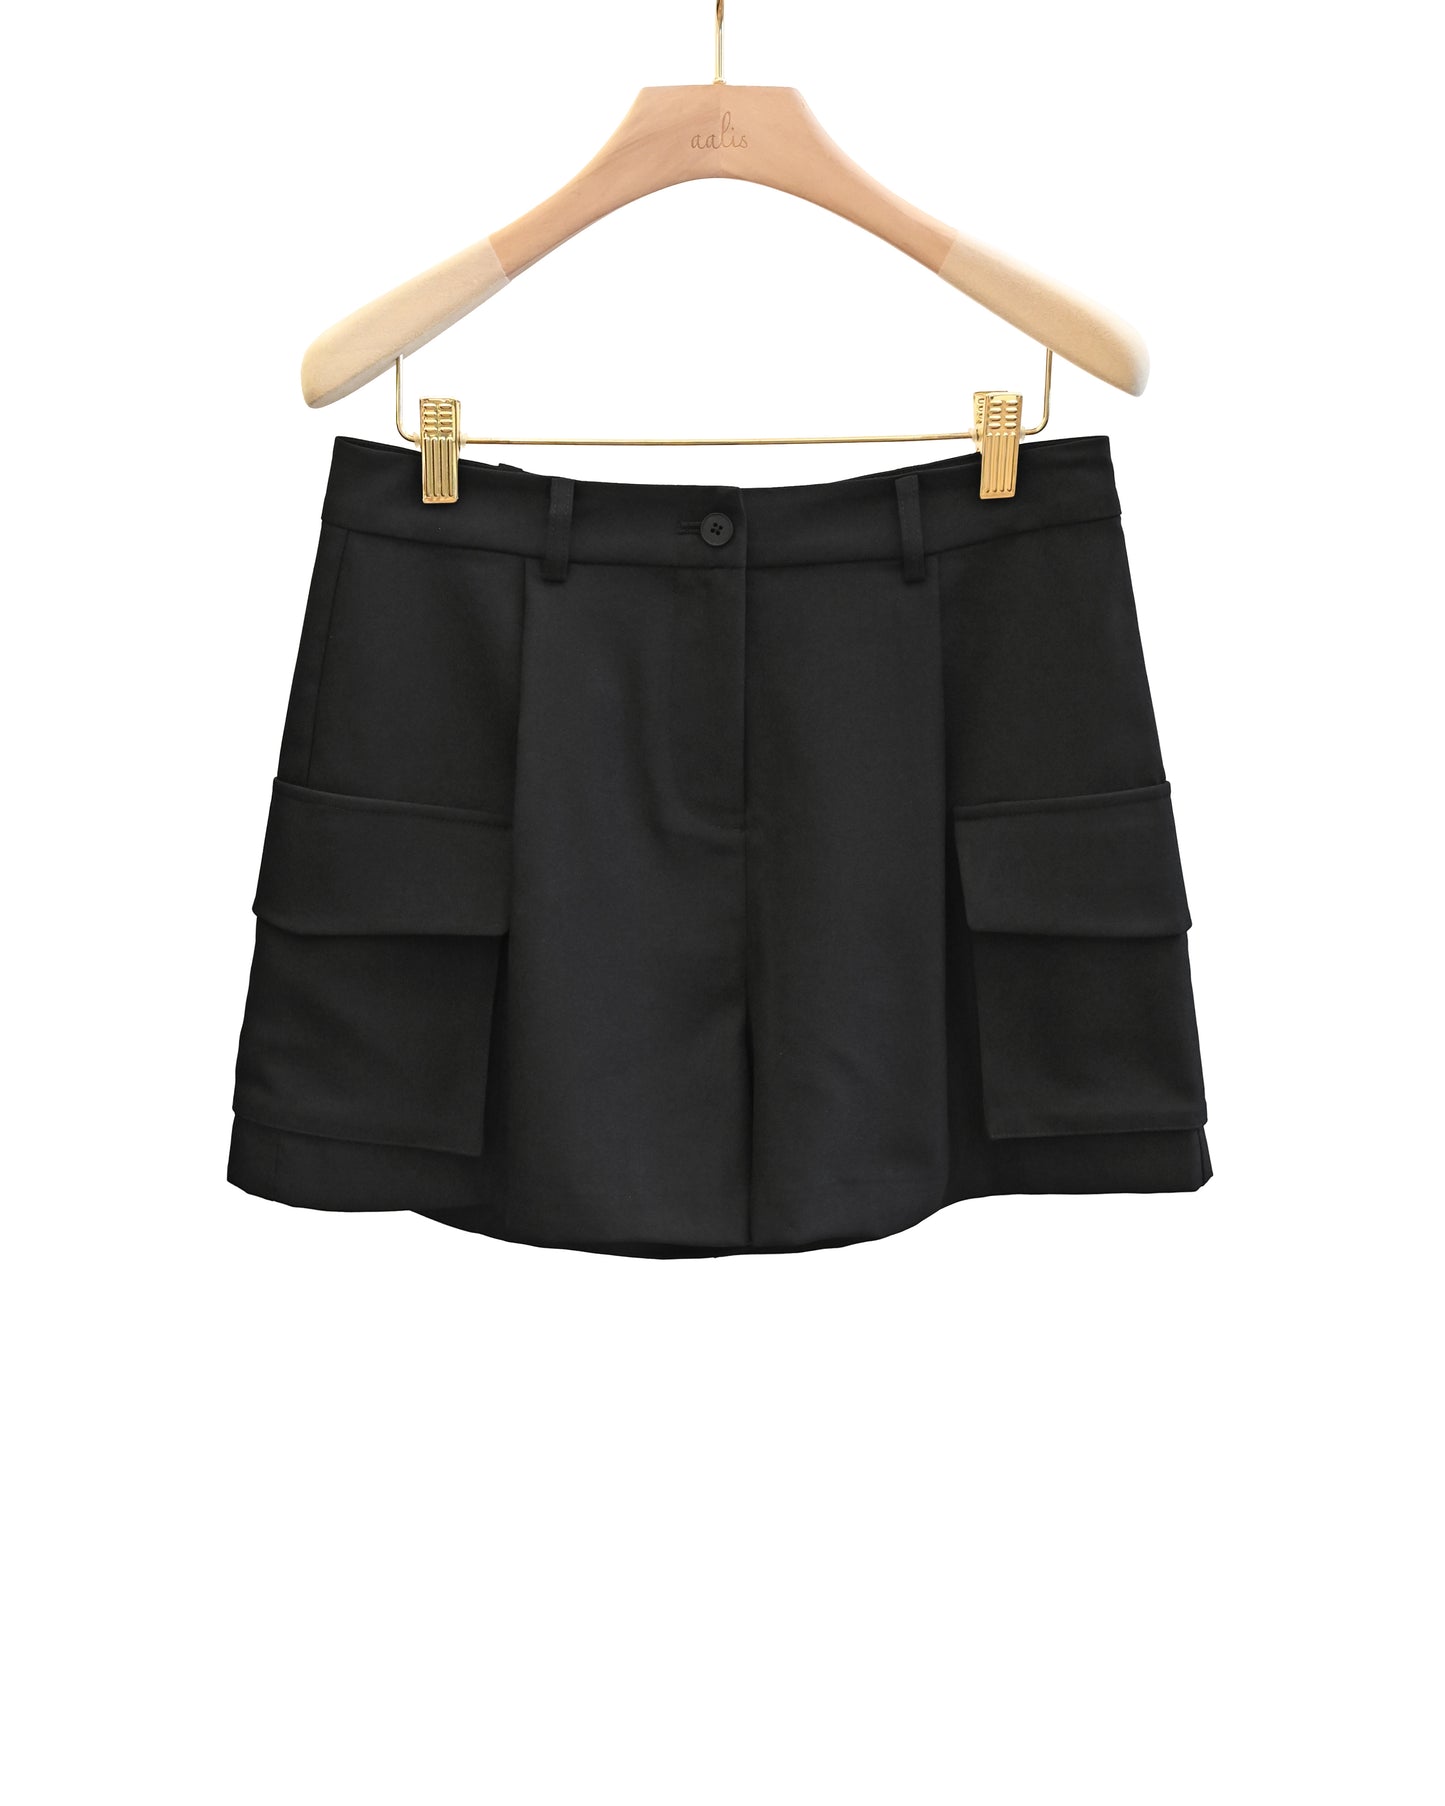 aalis TANEY cargo shorts (Black)